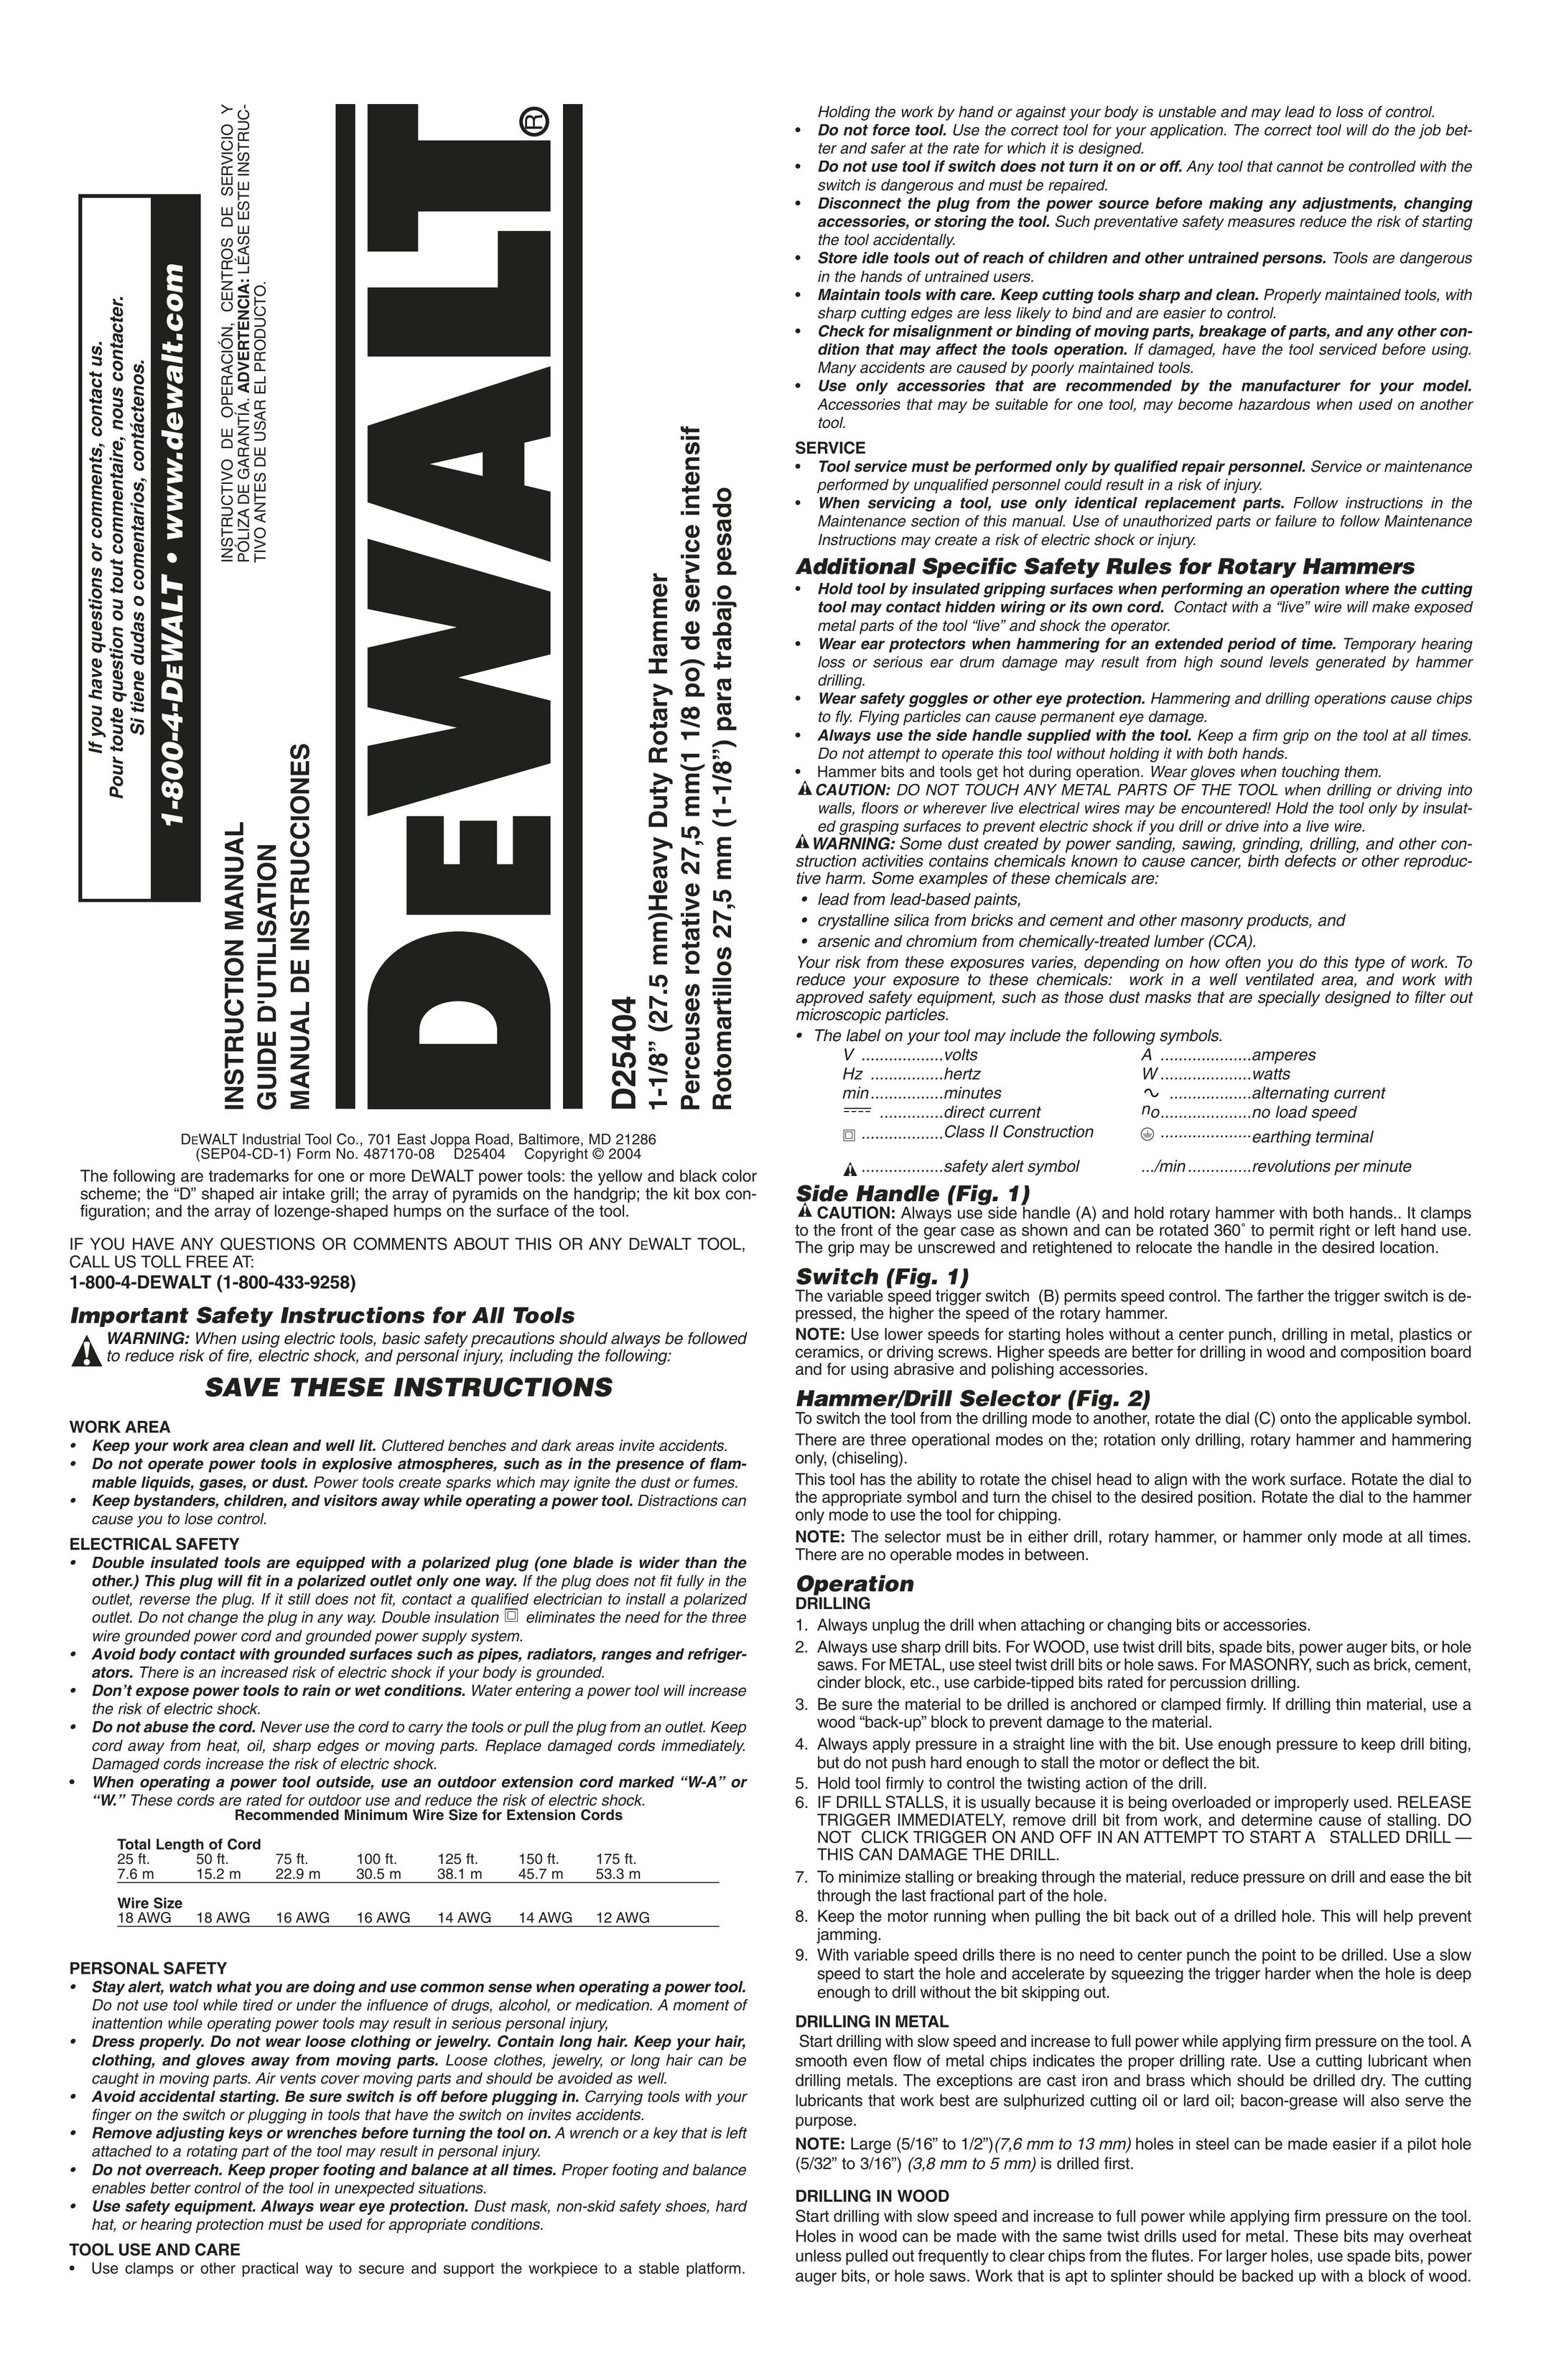 DeWalt D25404 Power Hammer User Manual